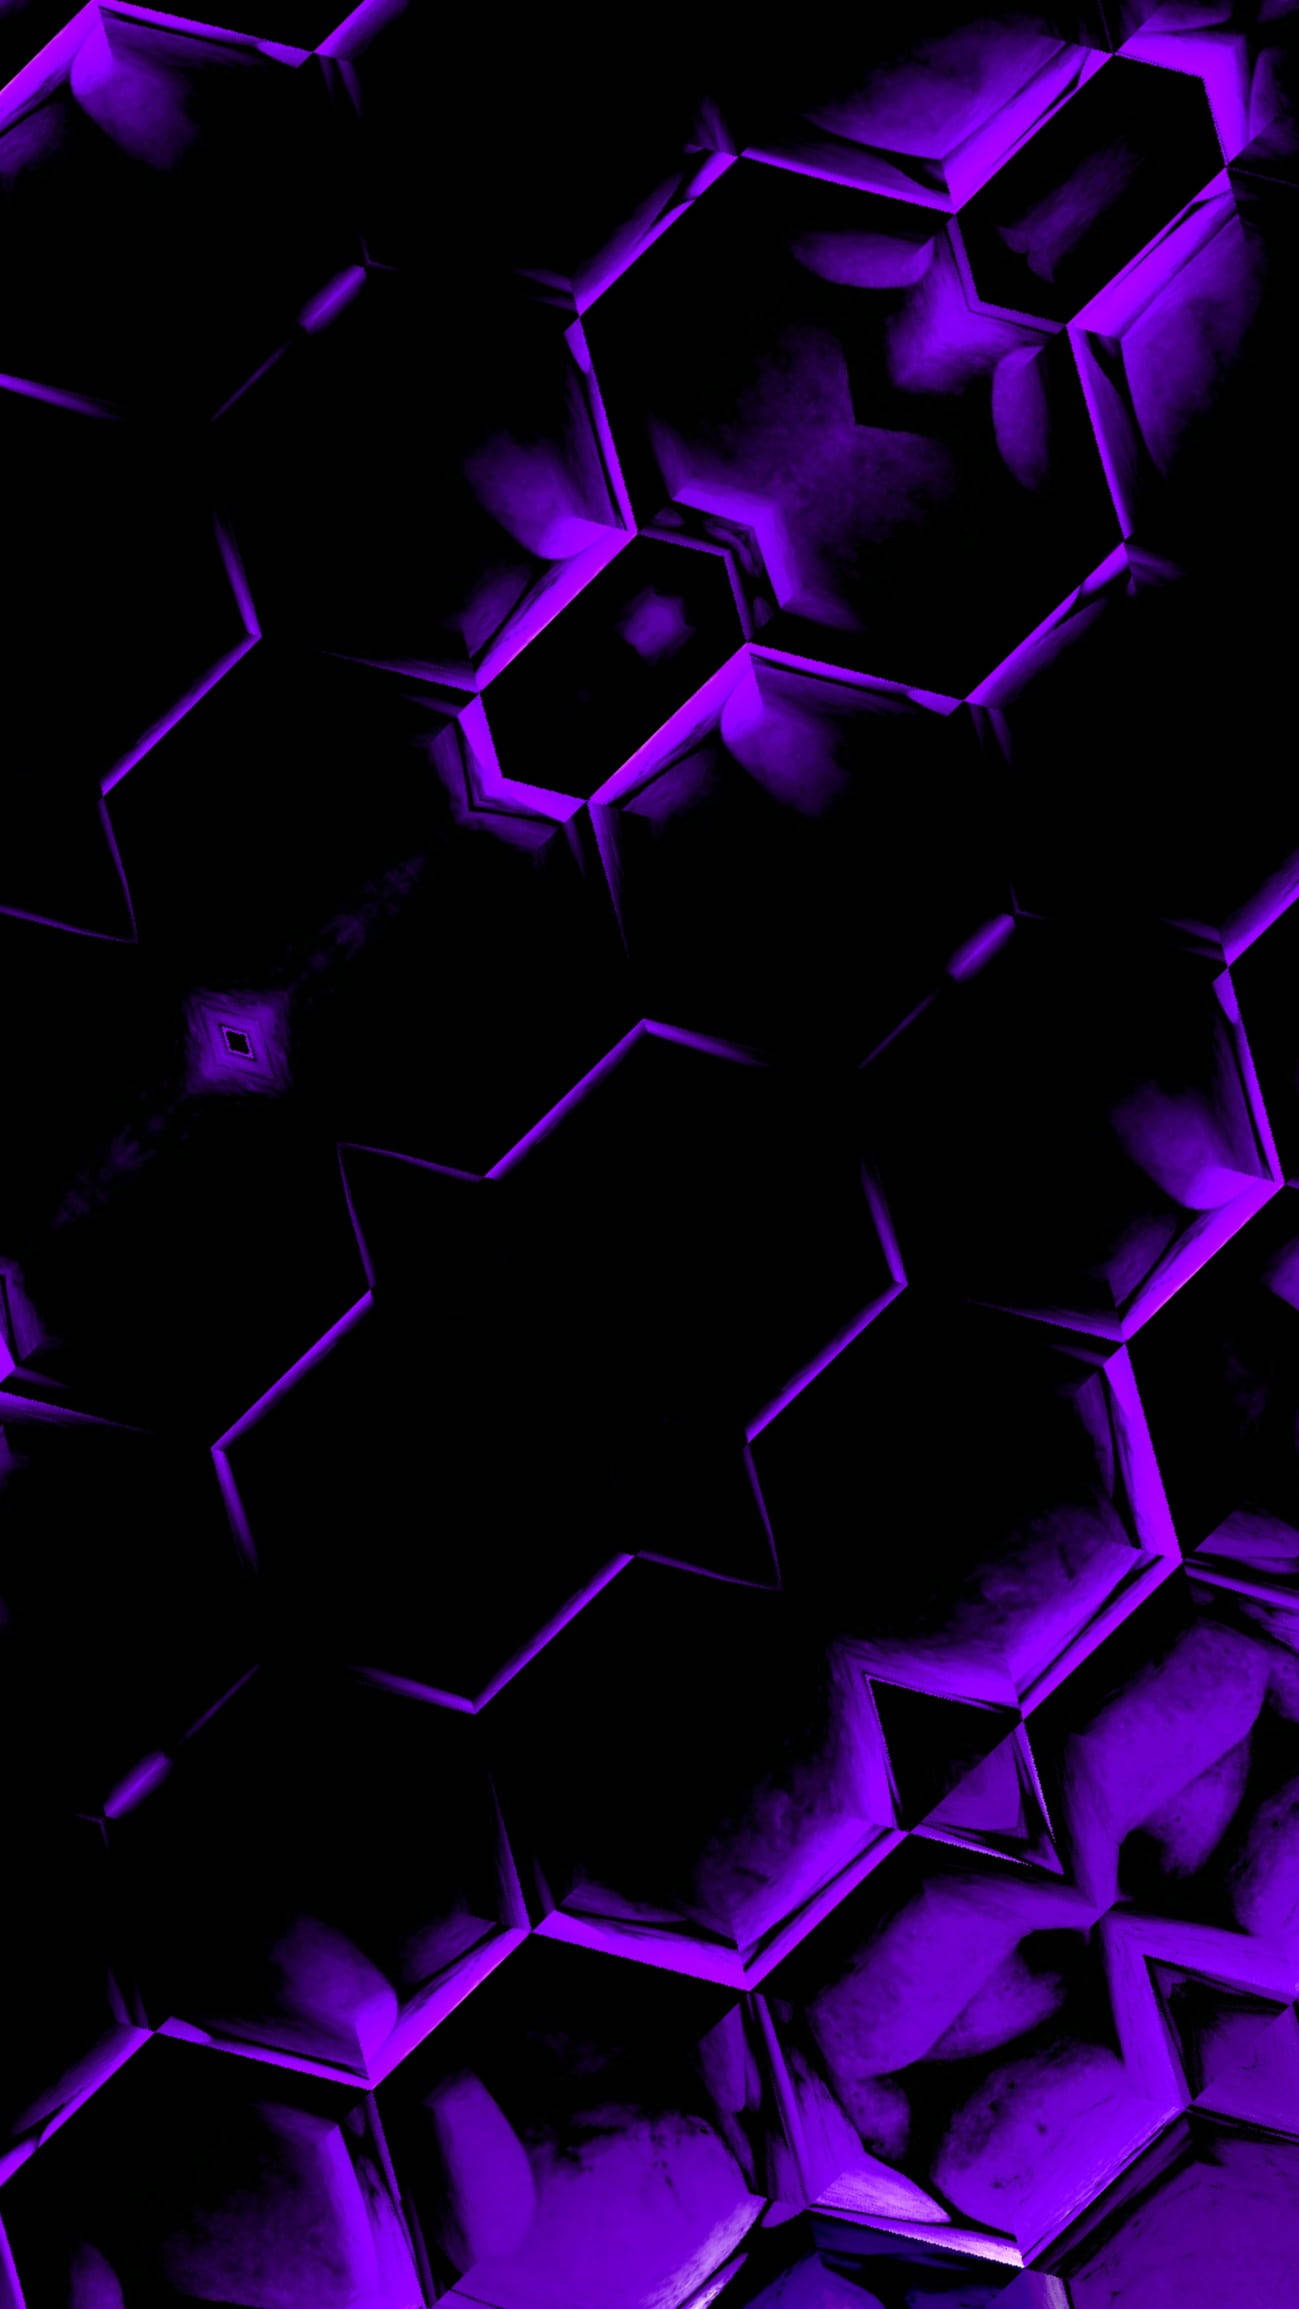 Futuristic Hexagonal Design On Black And Purple Smartphone Wallpaper